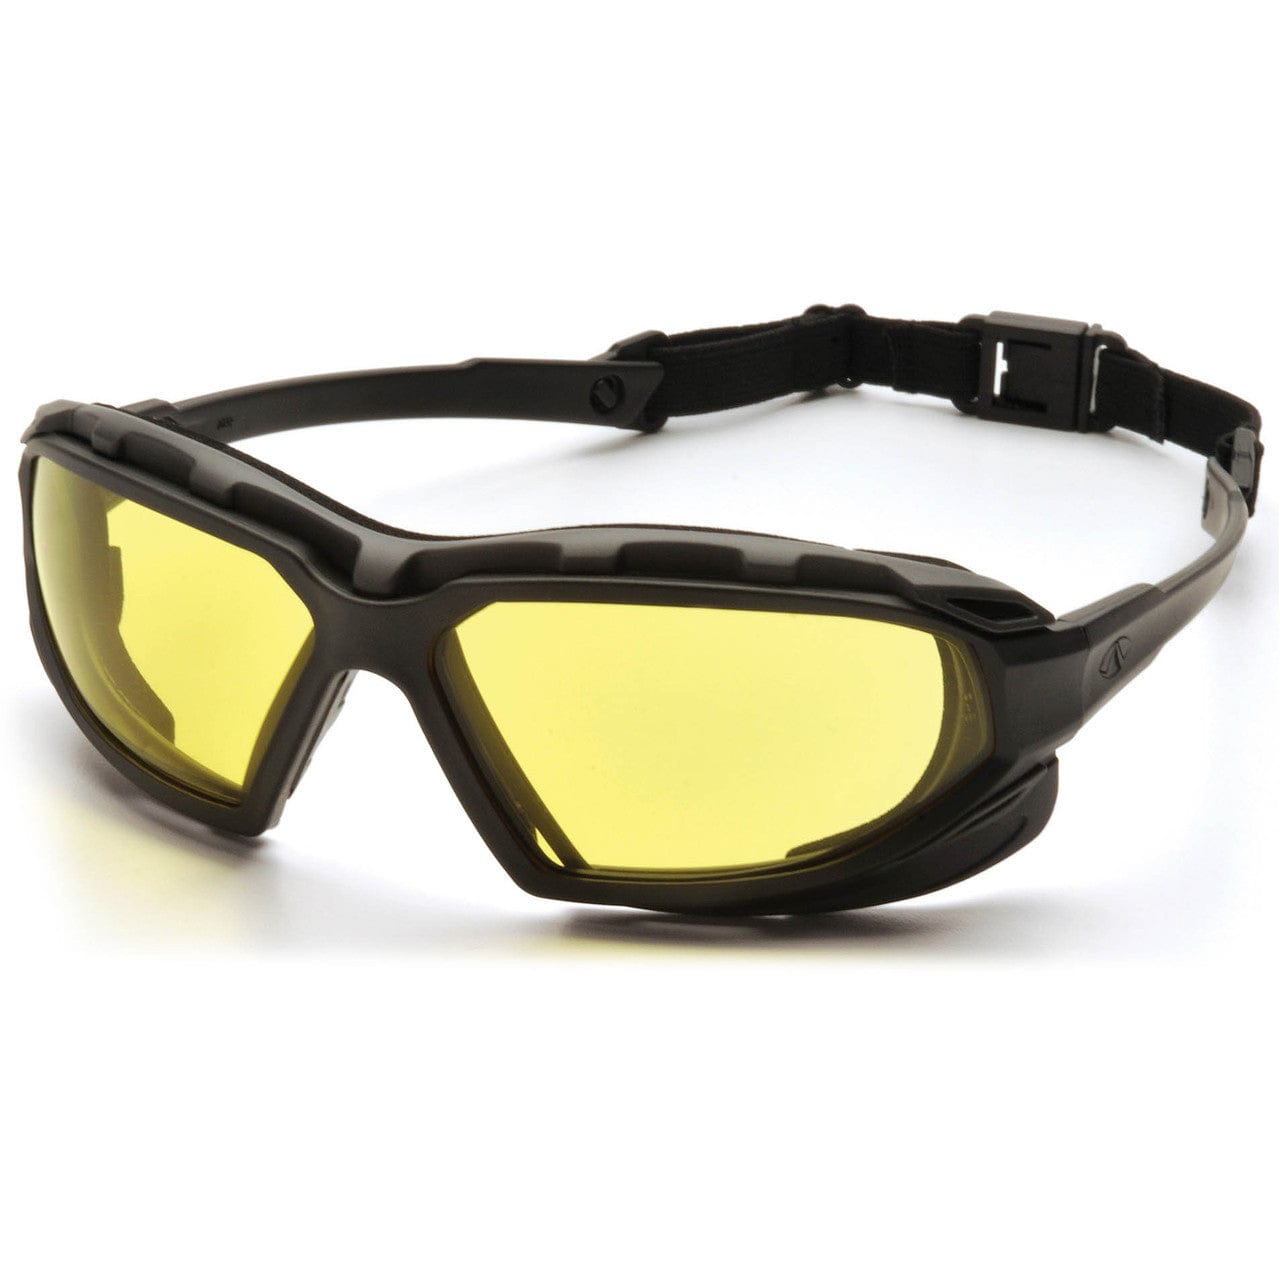 PPyramex Highlander Plus Safety Glasses Black Foam-Lined Frame Amber Anti-Fog Lens SBG5030DT